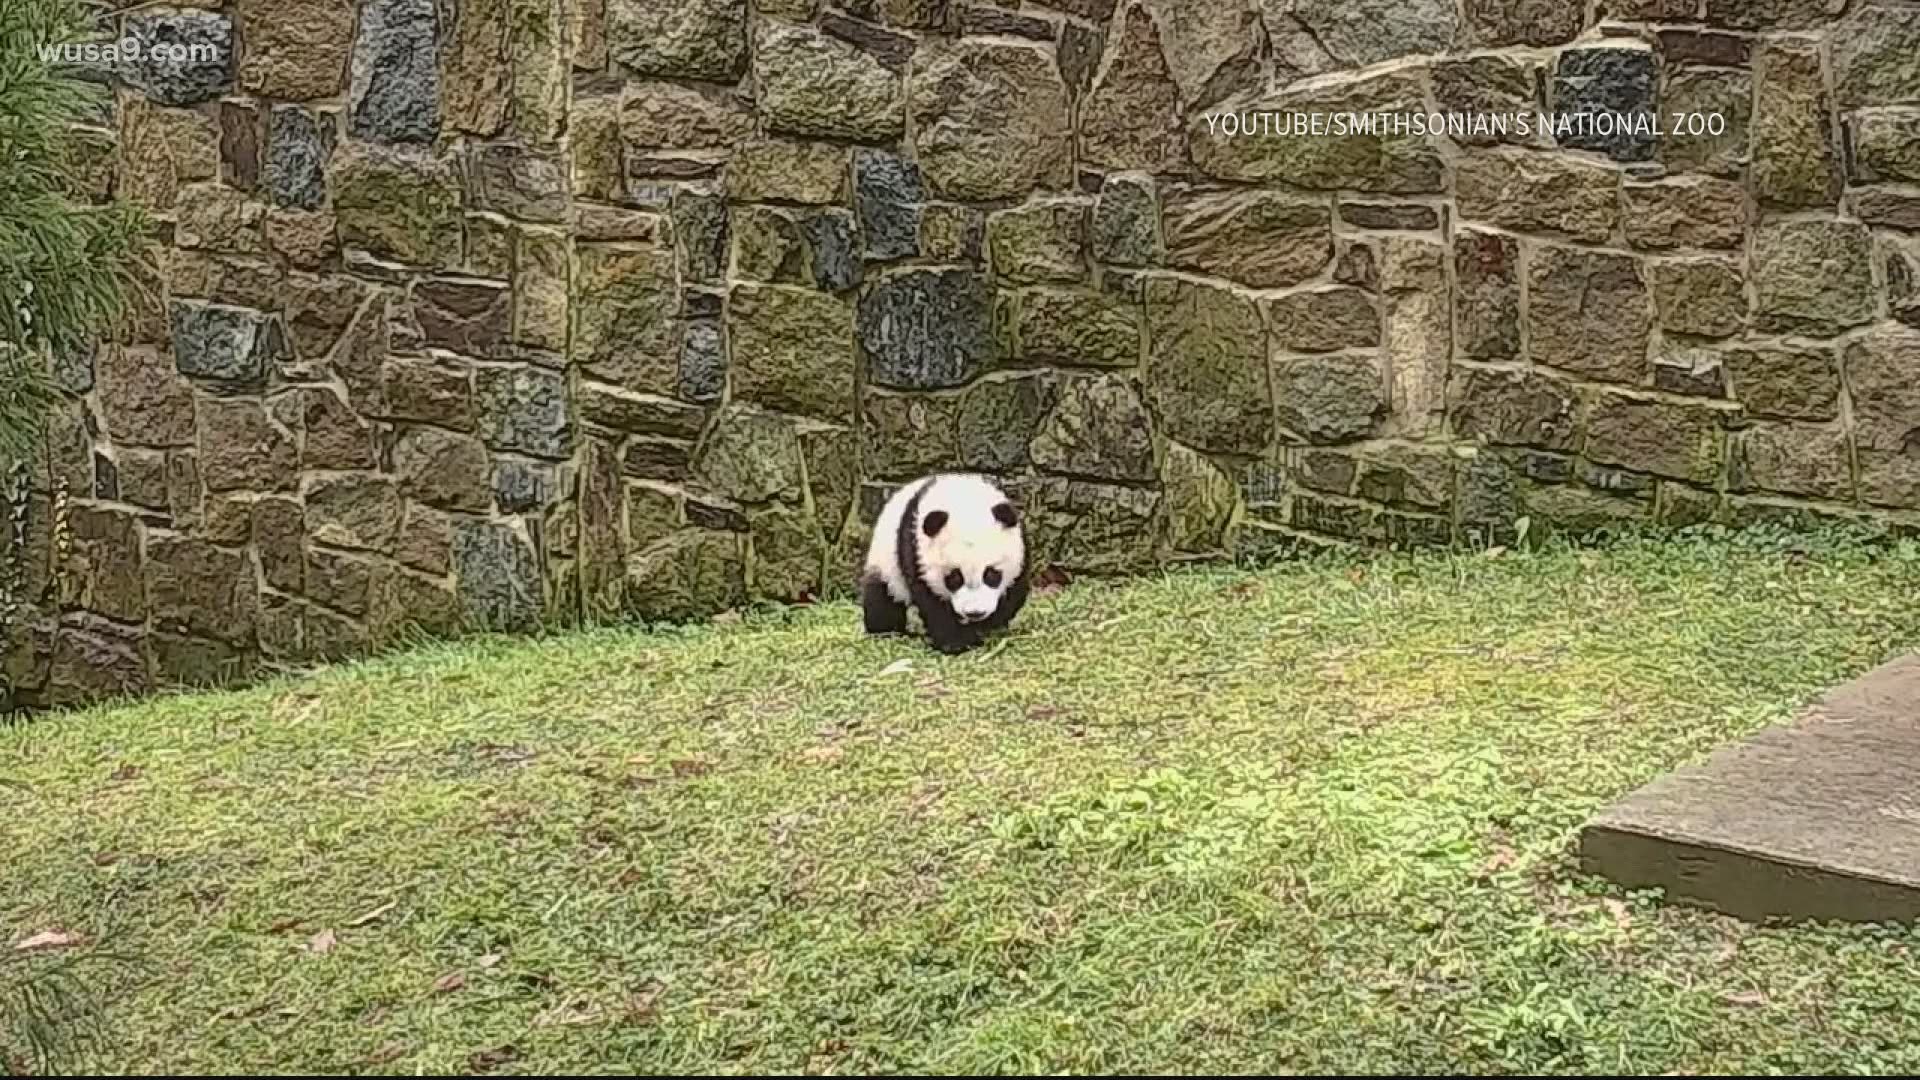 Giant panda cam Smithsonian National Zoo Washington DC | 5newsonline.com